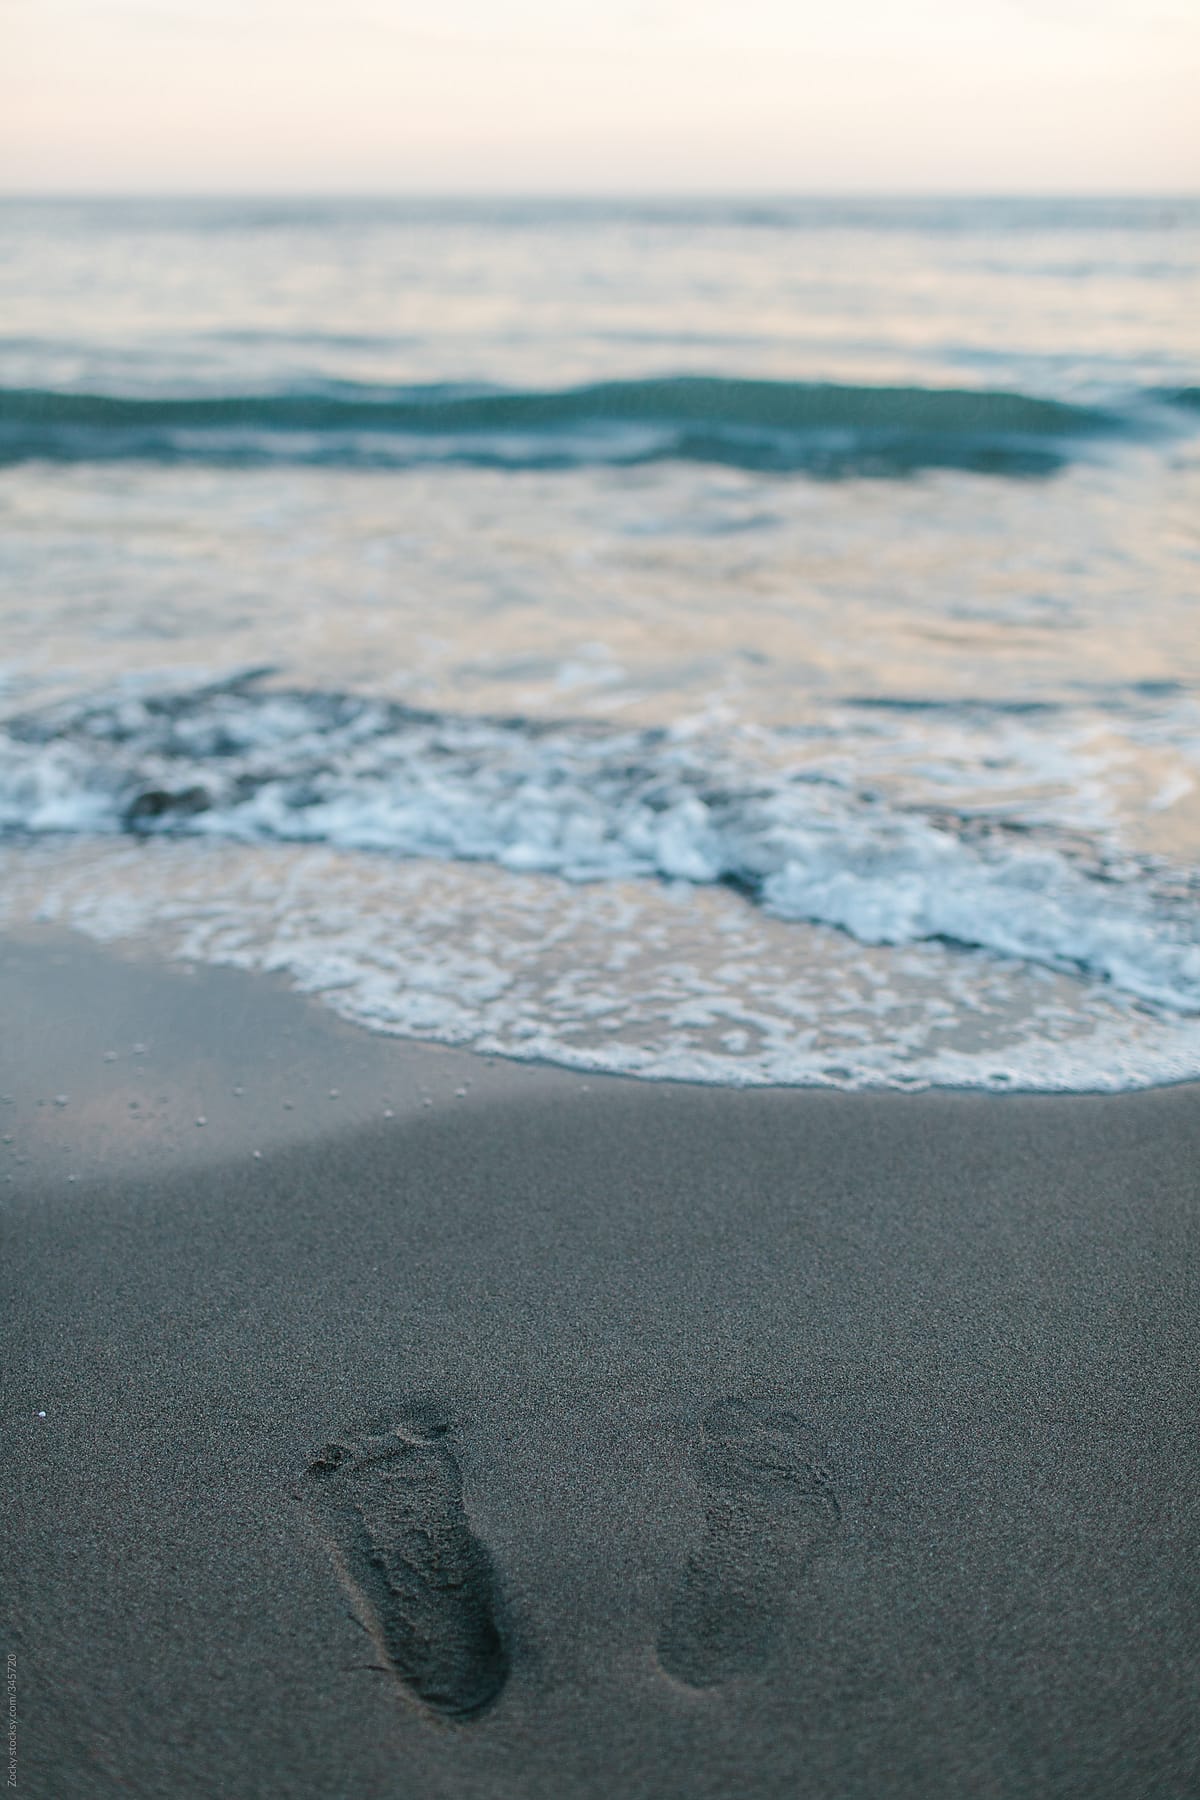 Fresh footprints on a beach